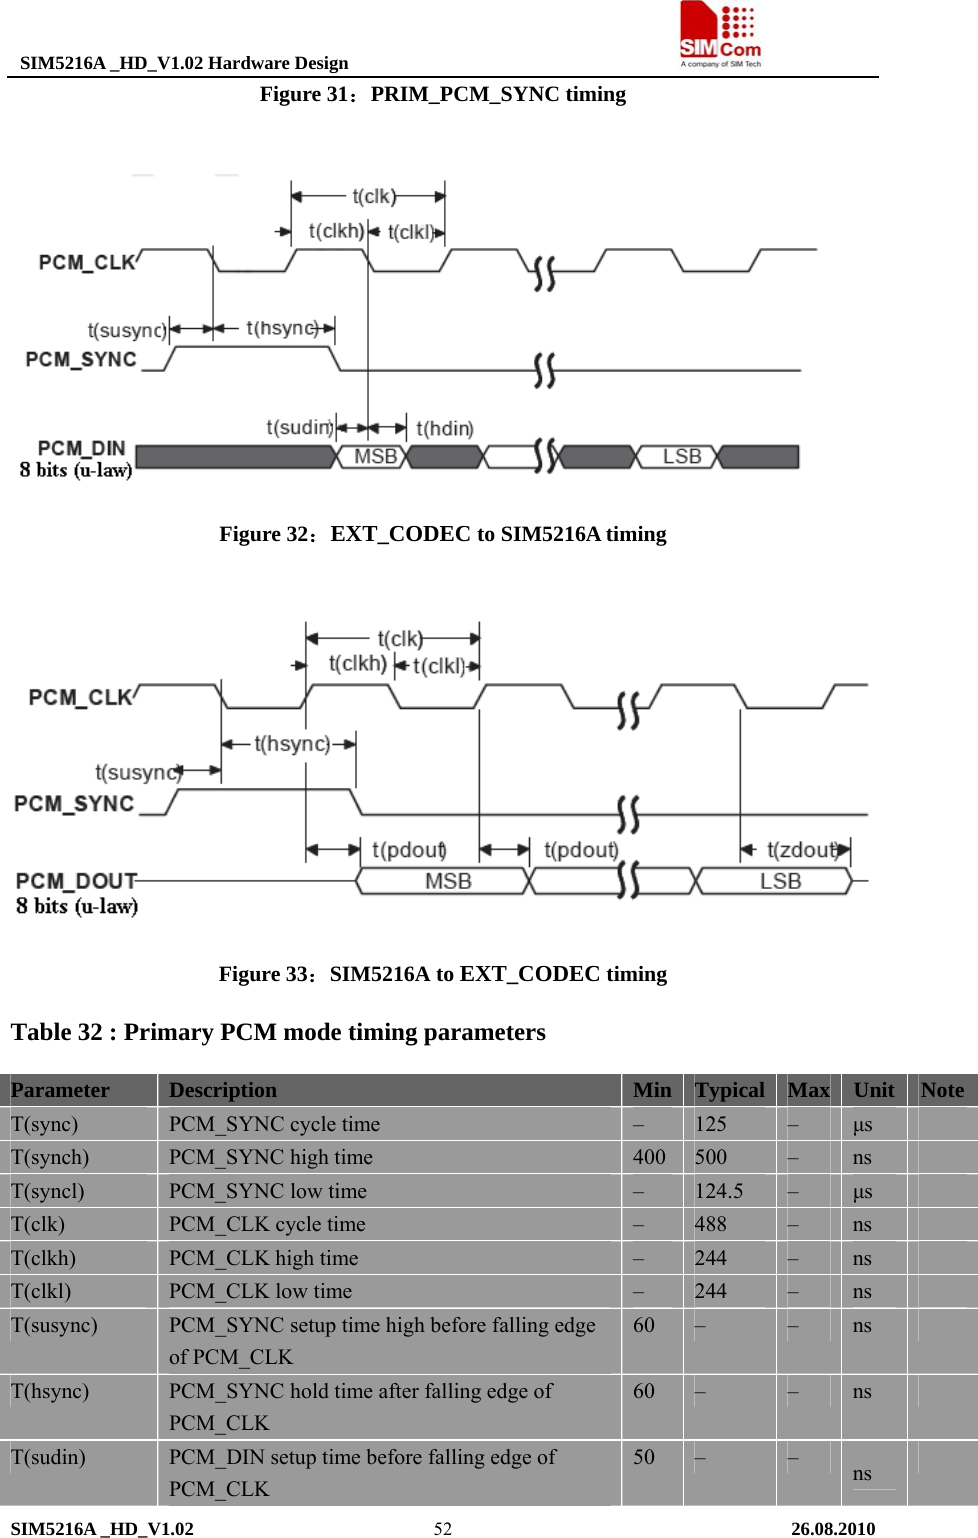  SIM5216A _HD_V1.02 Hardware Design                                     SIM5216A _HD_V1.02   26.08.2010   52Figure 31：PRIM_PCM_SYNC timing   Figure 32：EXT_CODEC to SIM5216A timing   Figure 33：SIM5216A to EXT_CODEC timing Table 32 : Primary PCM mode timing parameters Parameter   Description   Min  Typical  Max  Unit  Note T(sync)  PCM_SYNC cycle time  –  125  –  μs    T(synch)  PCM_SYNC high time  400 500  –  ns    T(syncl)  PCM_SYNC low time  –  124.5  –  μs    T(clk)   PCM_CLK cycle time  –  488  –  ns    T(clkh)  PCM_CLK high time  –  244  –  ns    T(clkl)  PCM_CLK low time  –  244  –  ns    T(susync)  PCM_SYNC setup time high before falling edge of PCM_CLK 60  –  –  ns     T(hsync)  PCM_SYNC hold time after falling edge of PCM_CLK 60  –  –  ns    T(sudin)   PCM_DIN setup time before falling edge of PCM_CLK 50  –  –  ns    